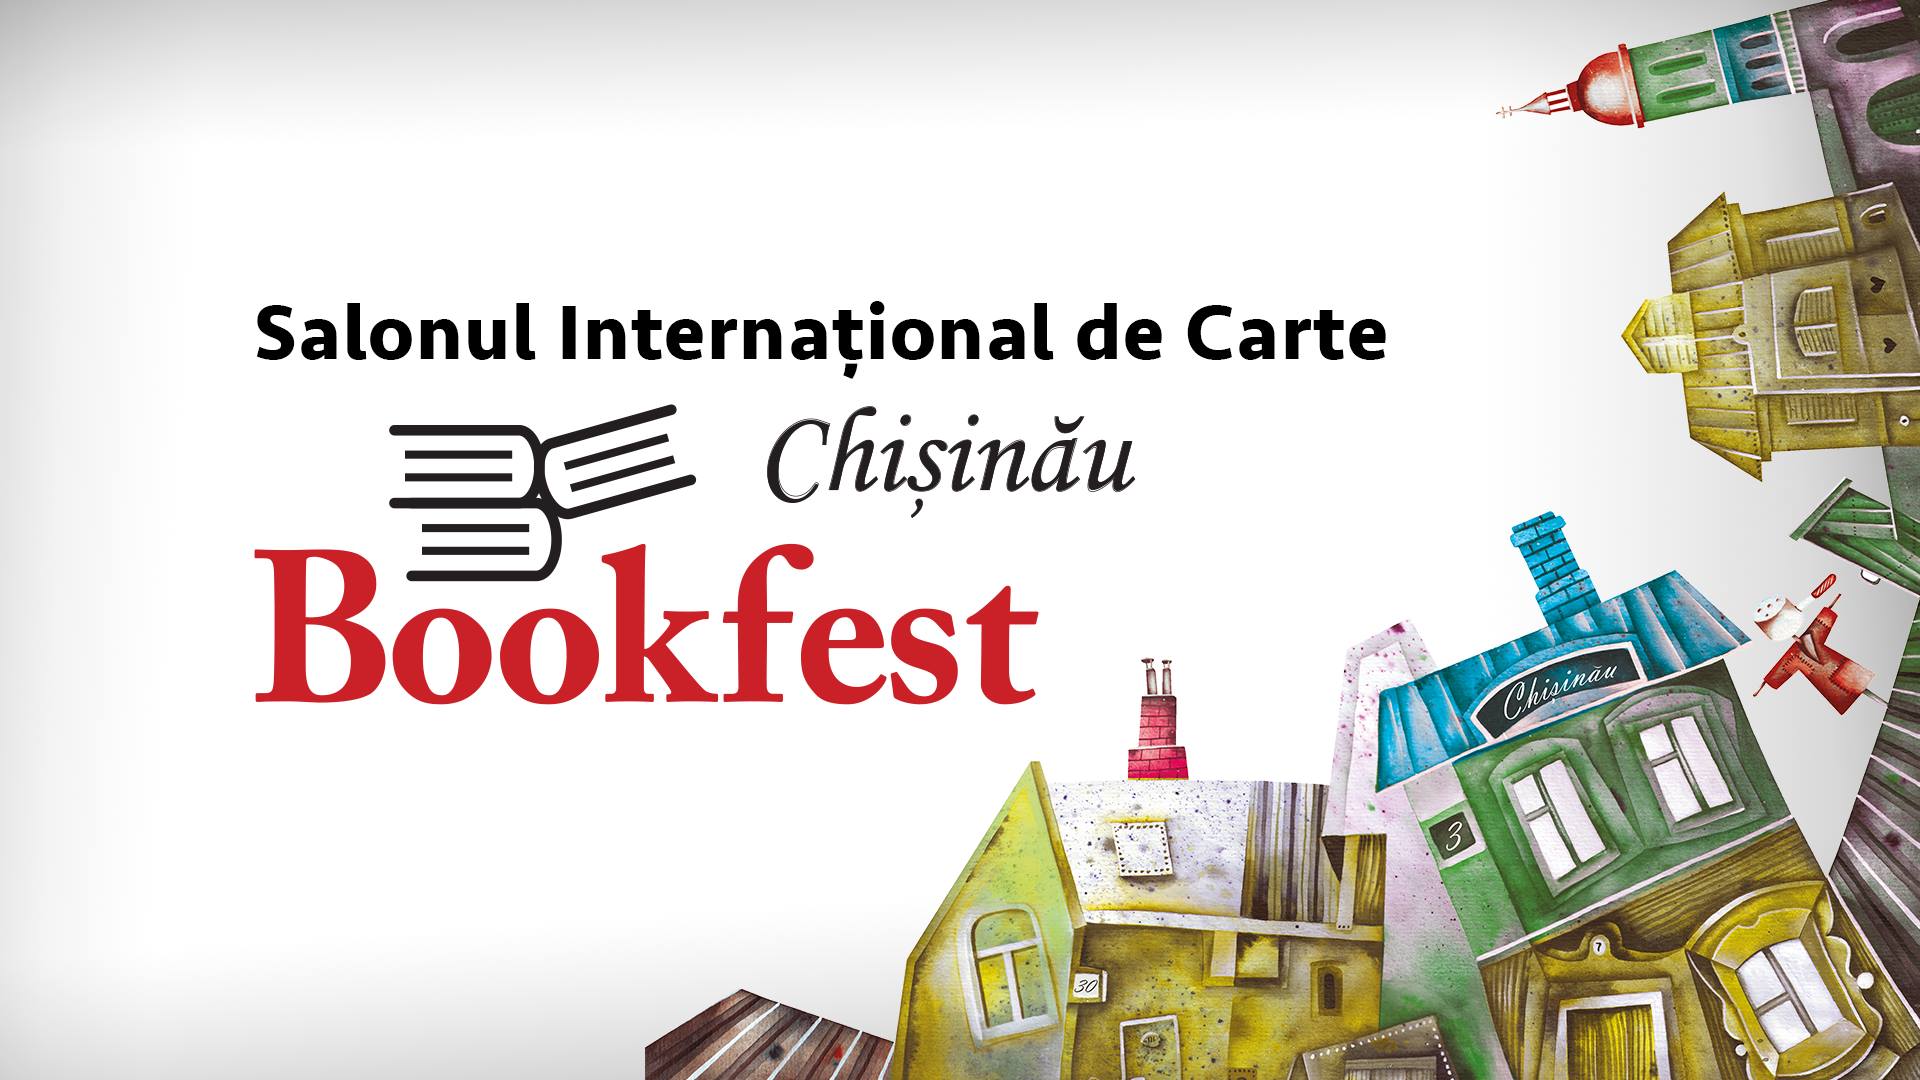 bookfest_2017